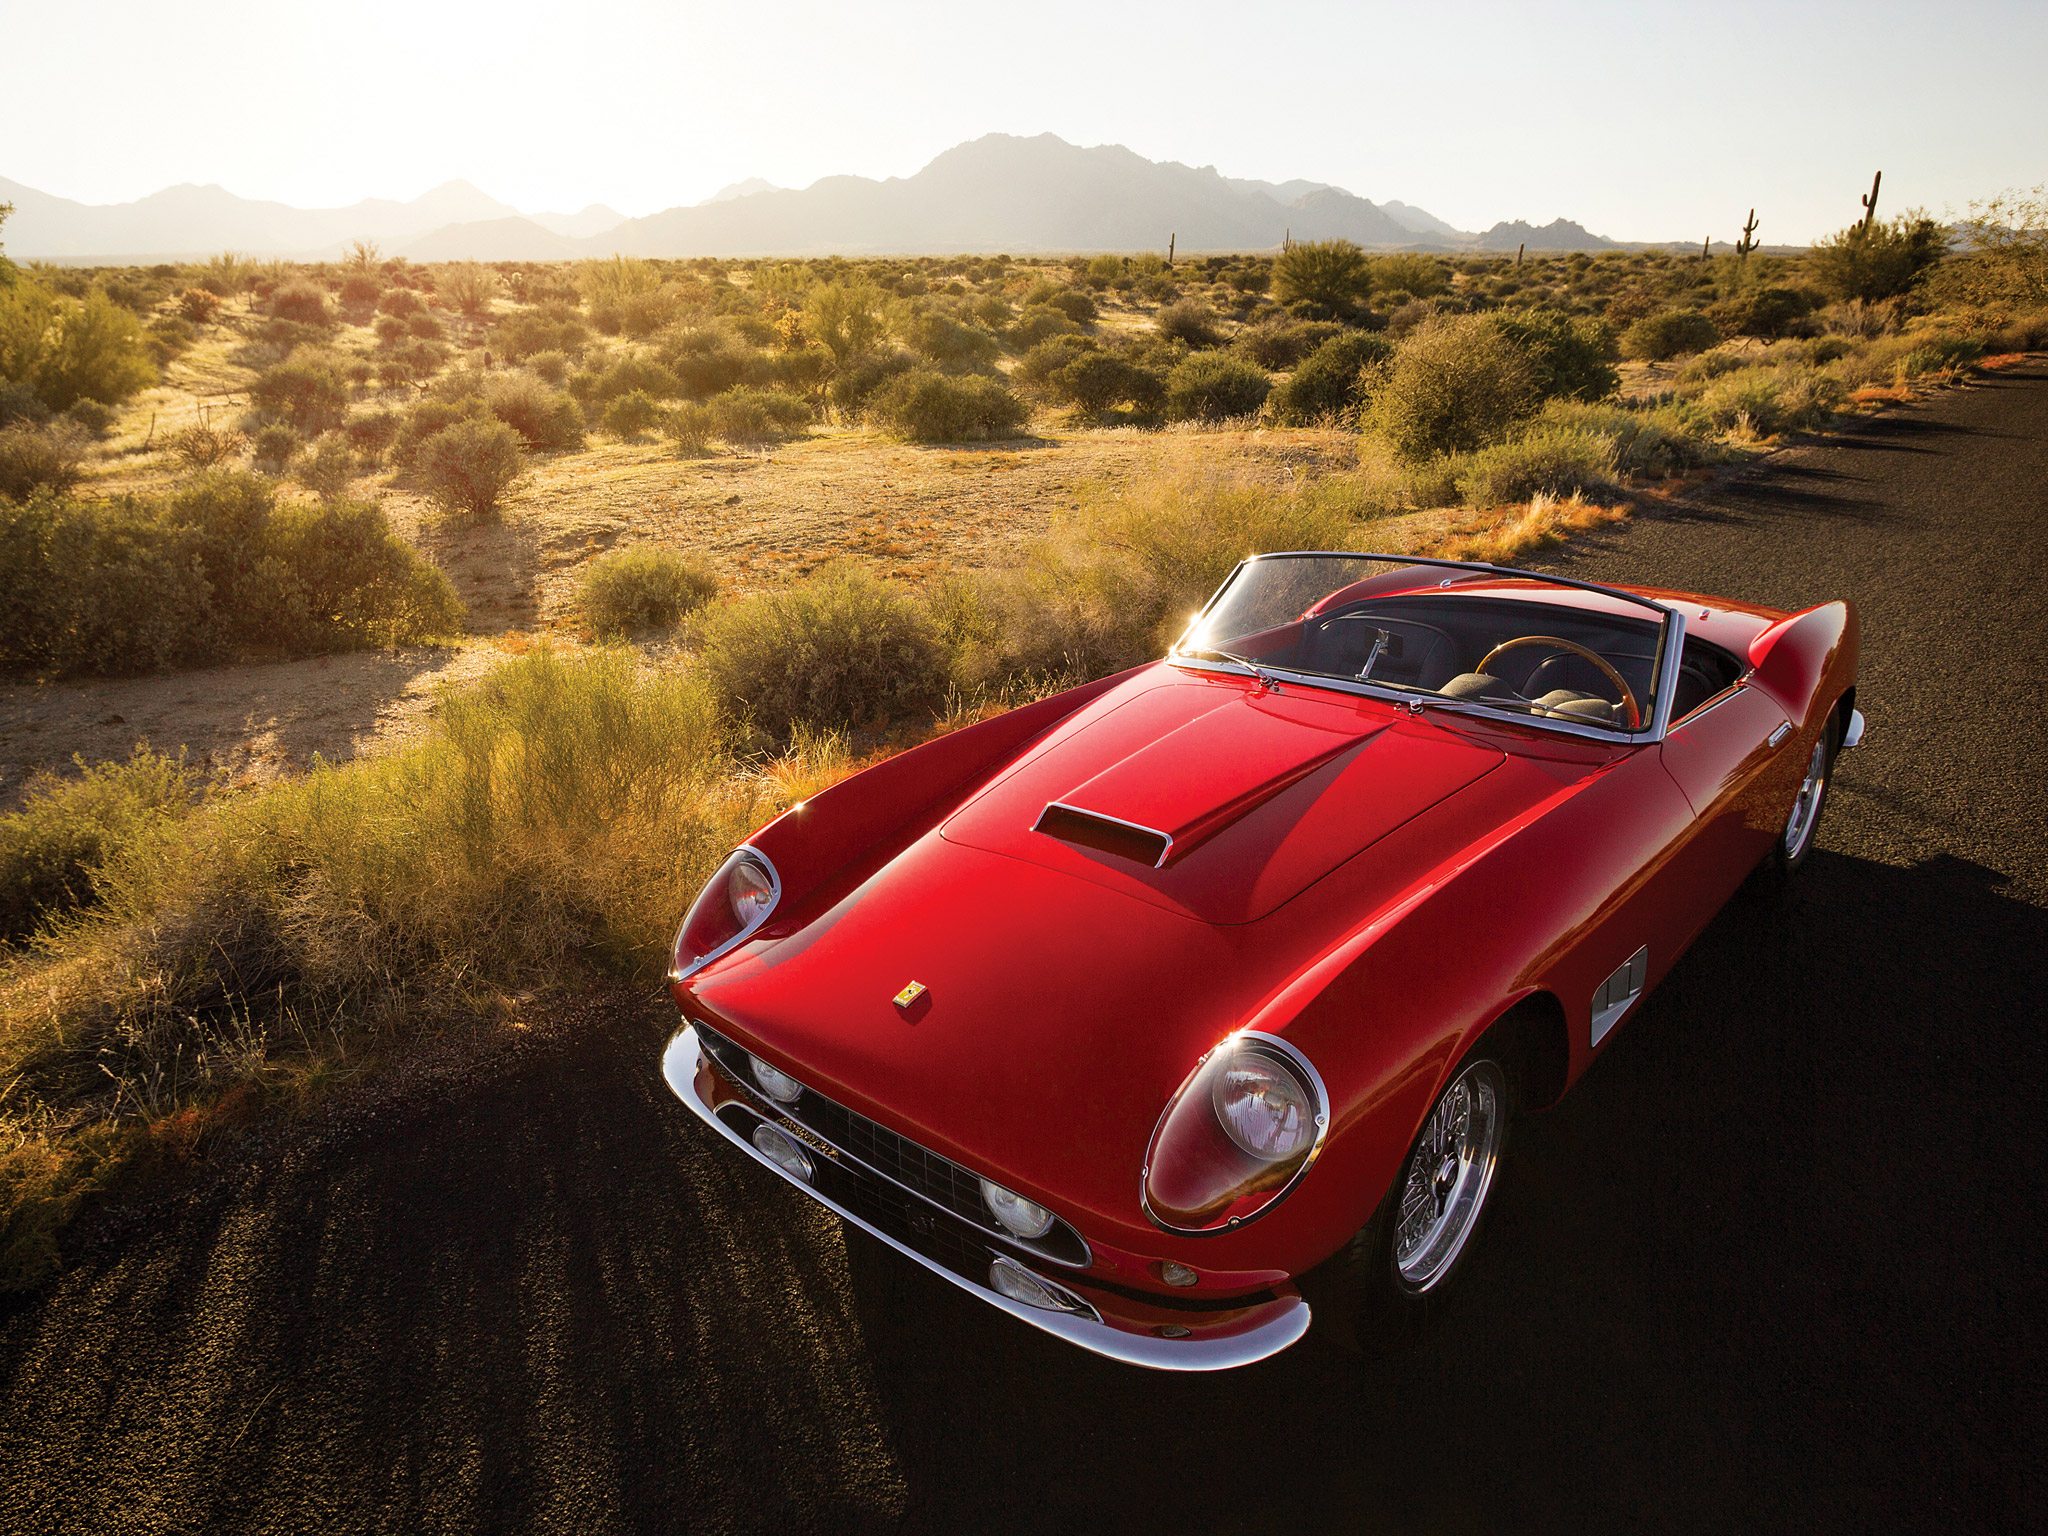  1963 Ferrari 250 GT California Spyder Wallpaper.